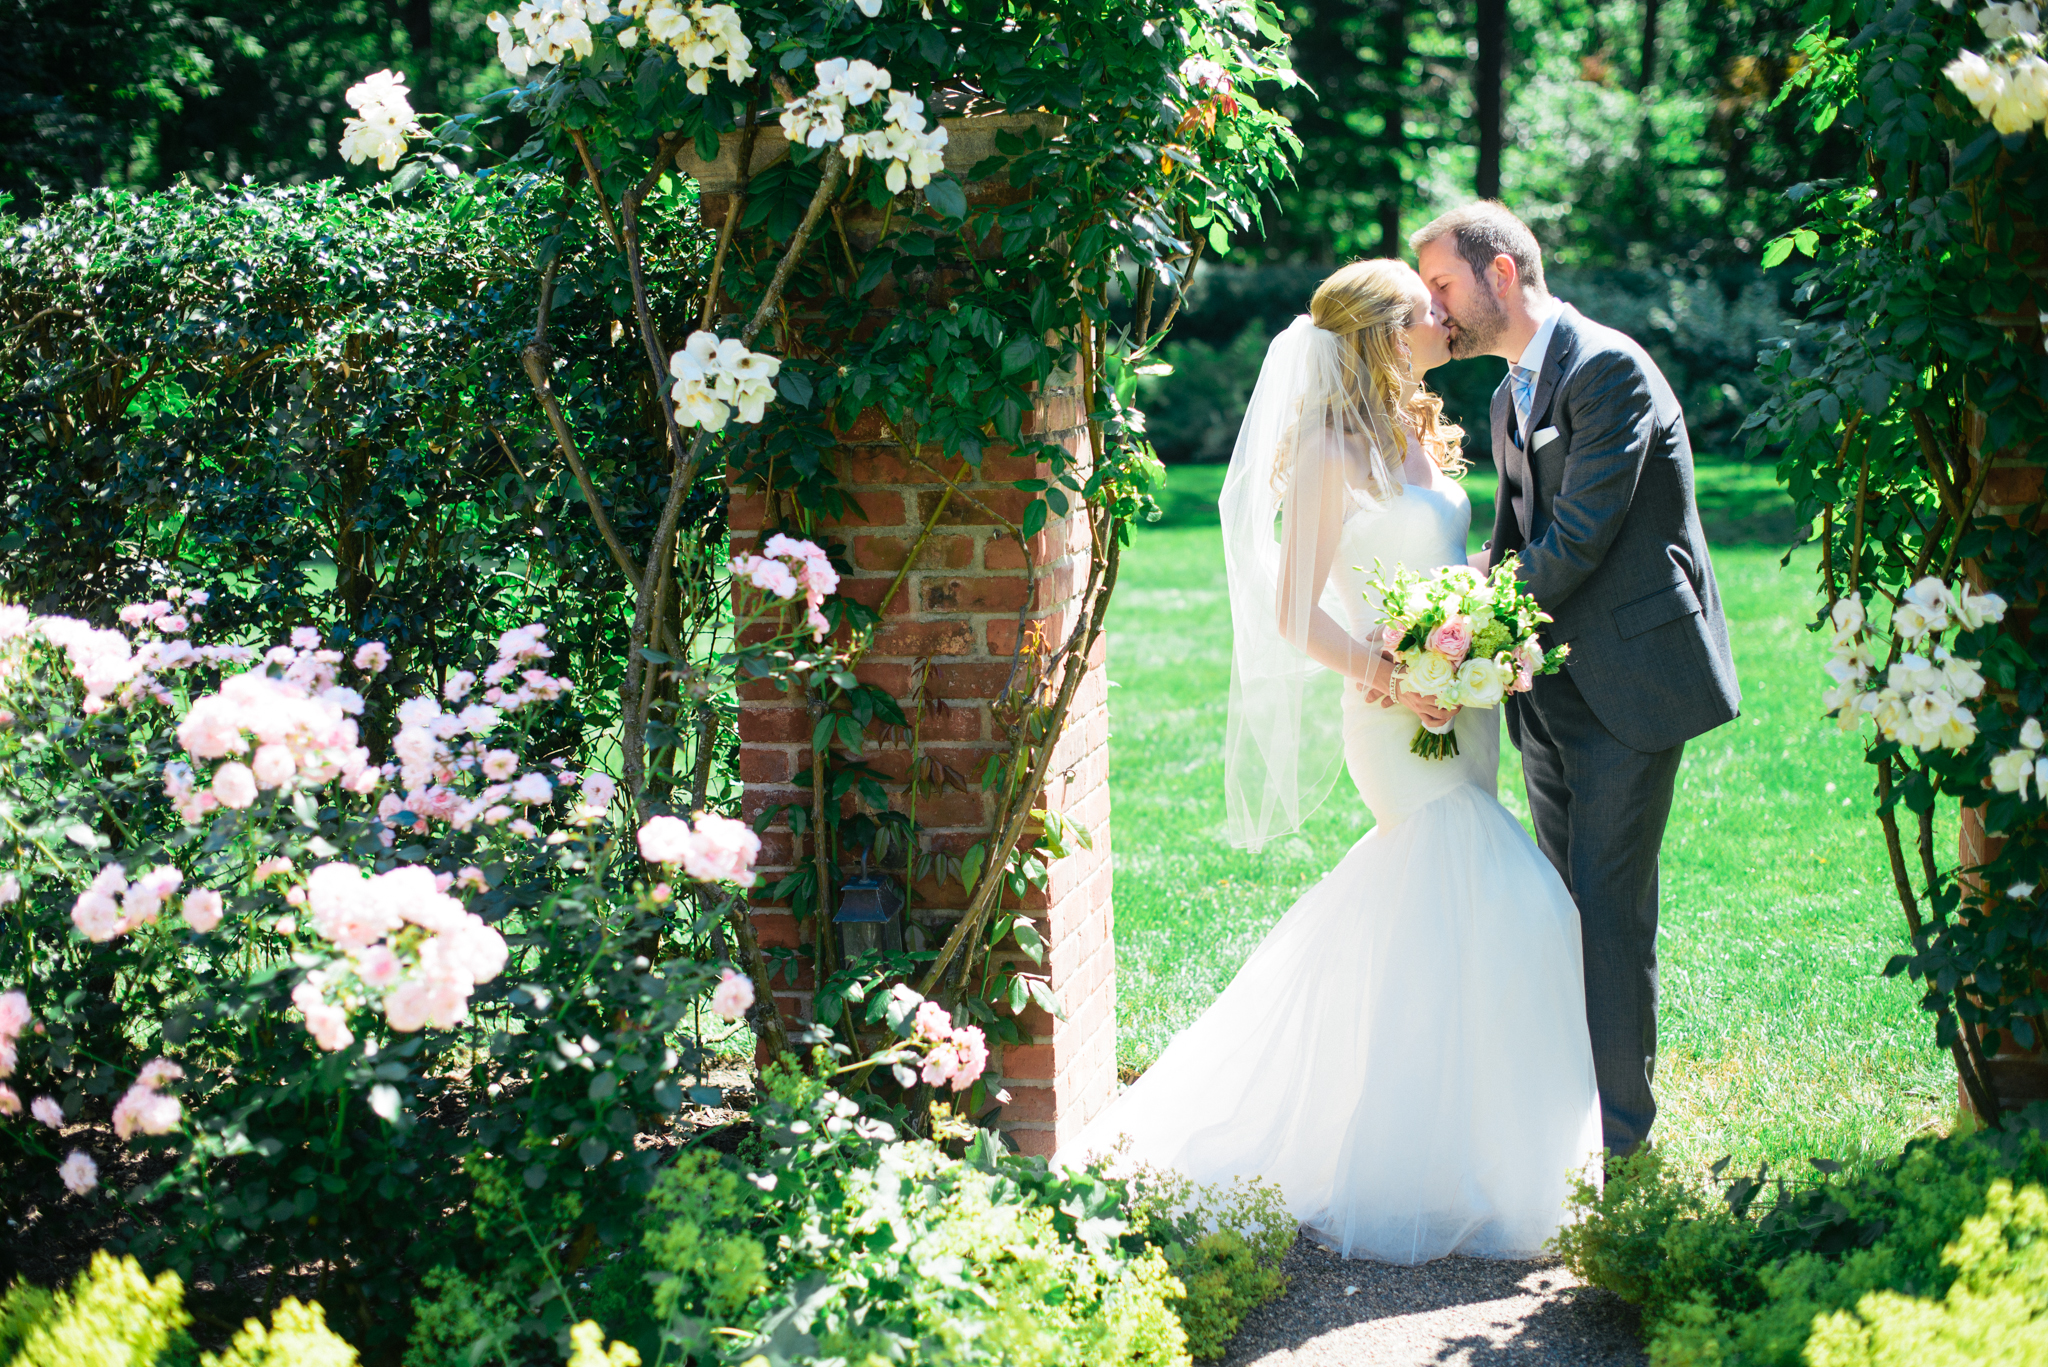 Maggie + Tom - Bernardsville New Jersey Backyard Wedding - Alison Dunn Photography photo